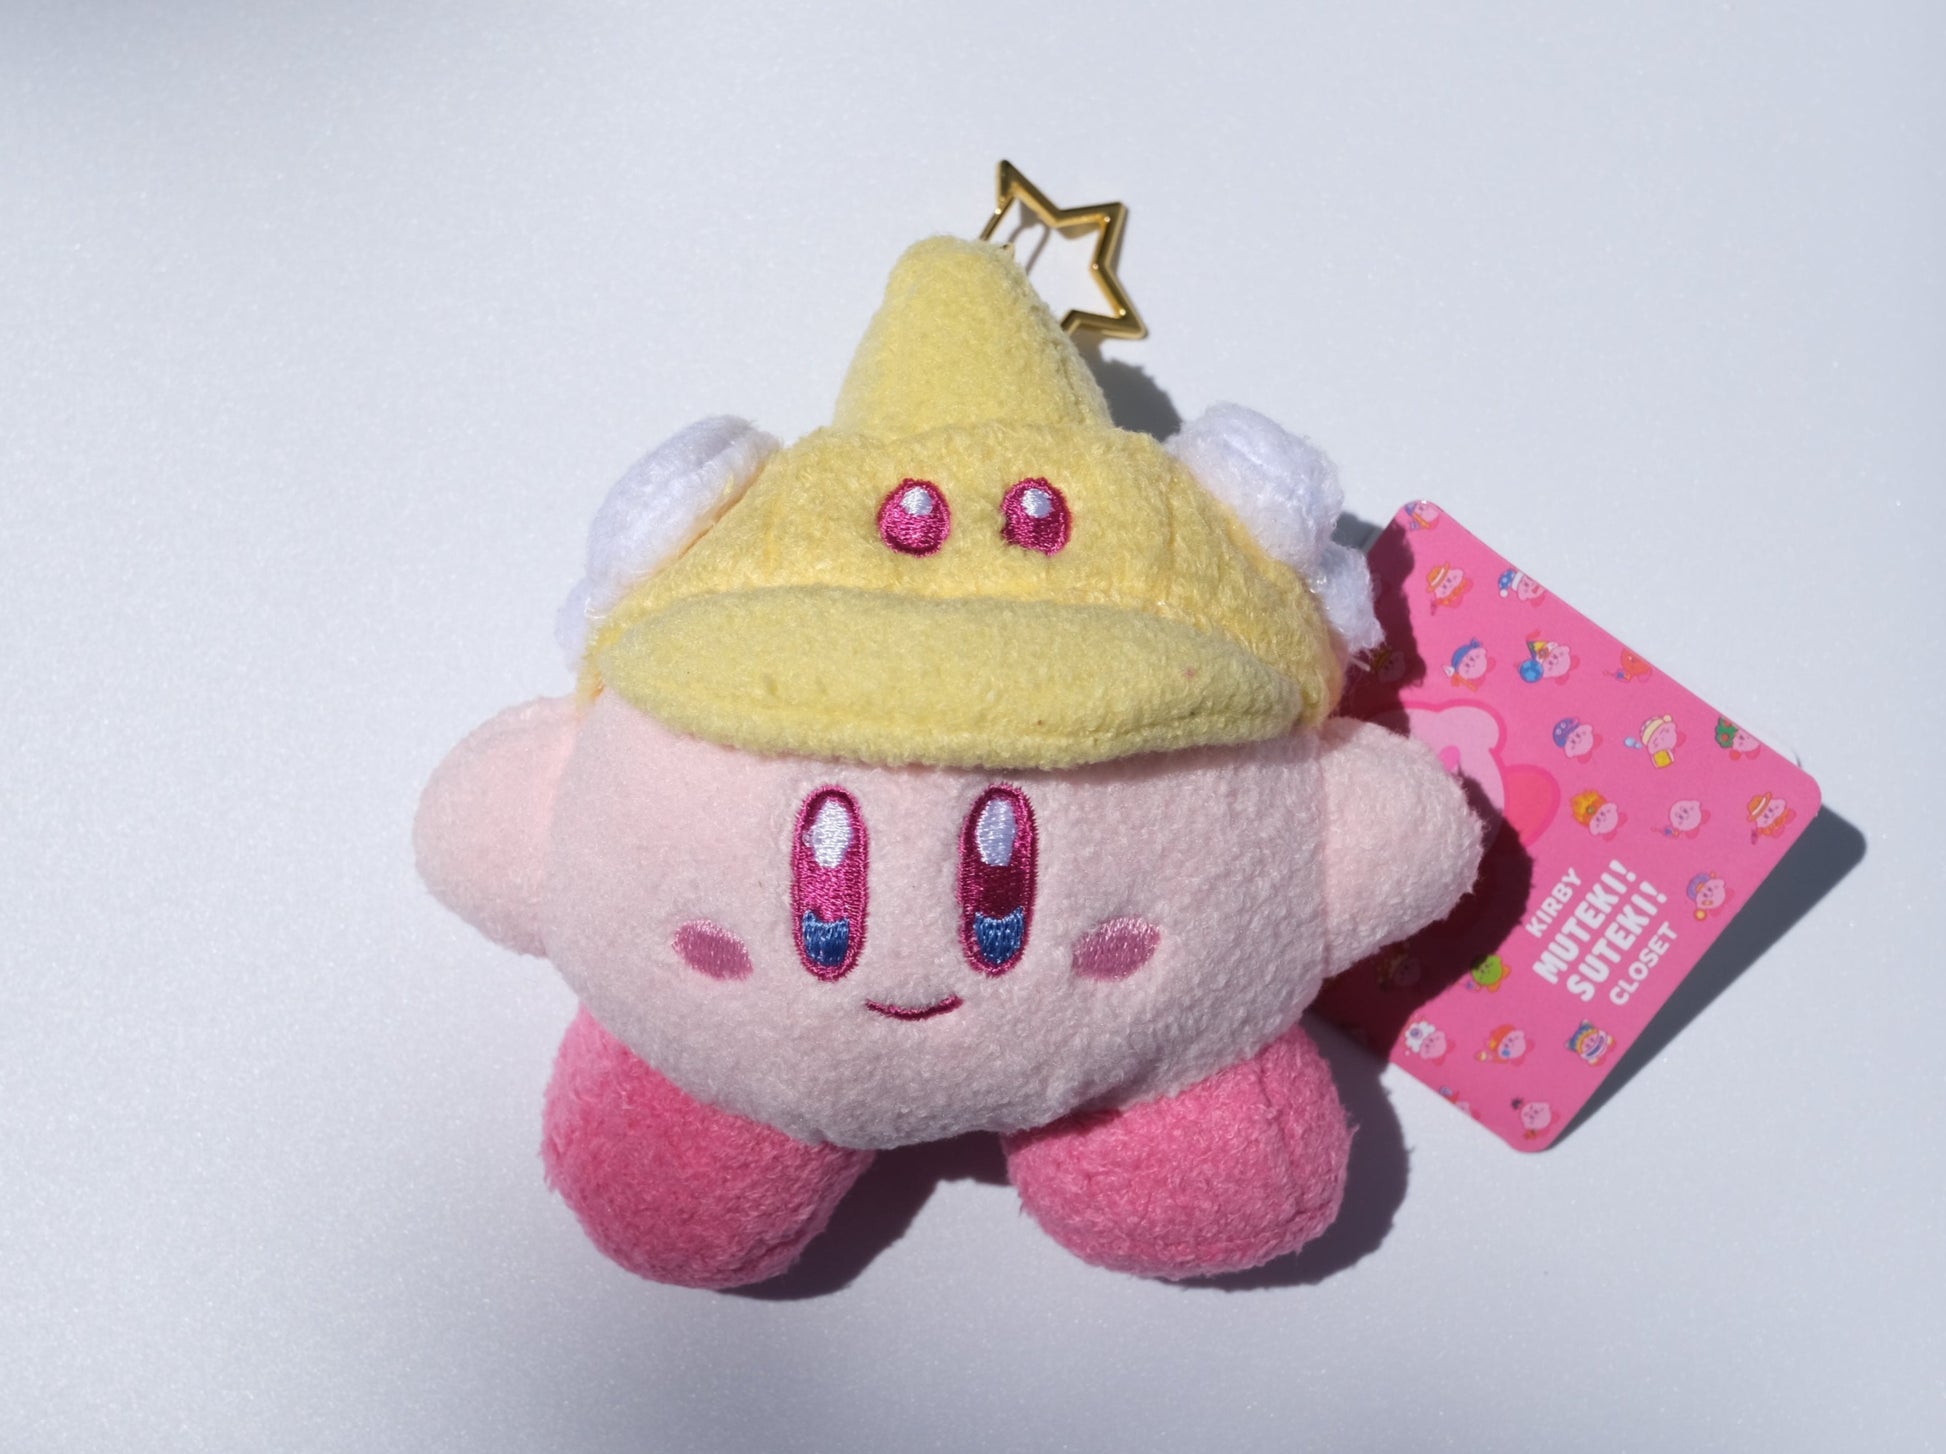 Puffy Kirby Keychain 